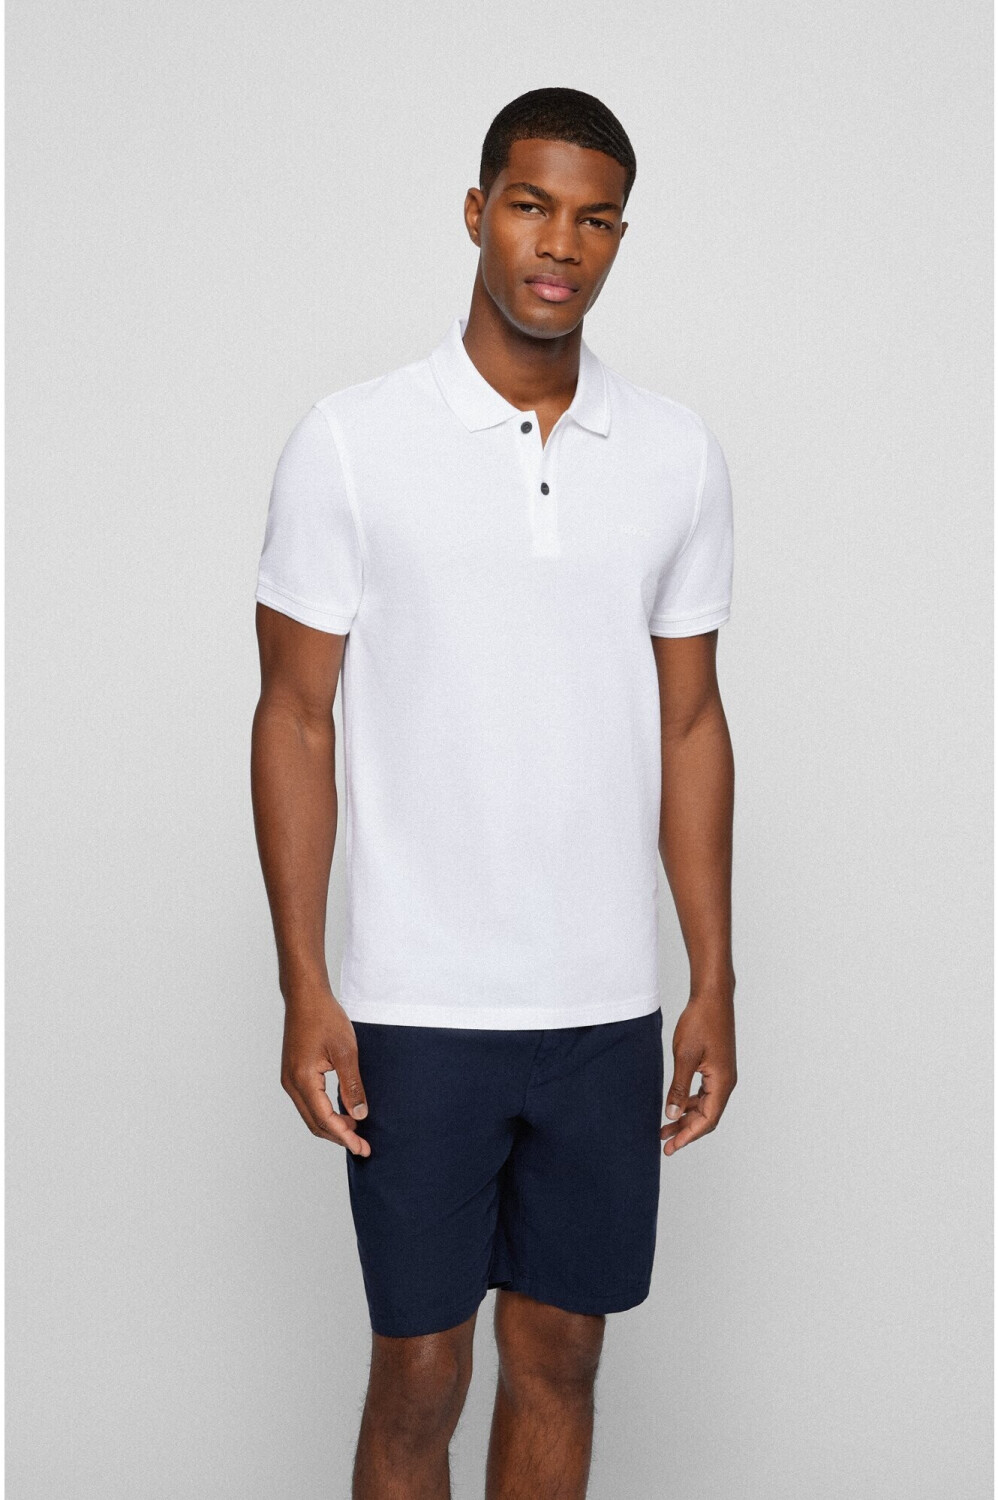 Hugo Boss Prime Slim-Fit Poloshirt € Preisvergleich bei white (50468576-100) 48,00 | ab